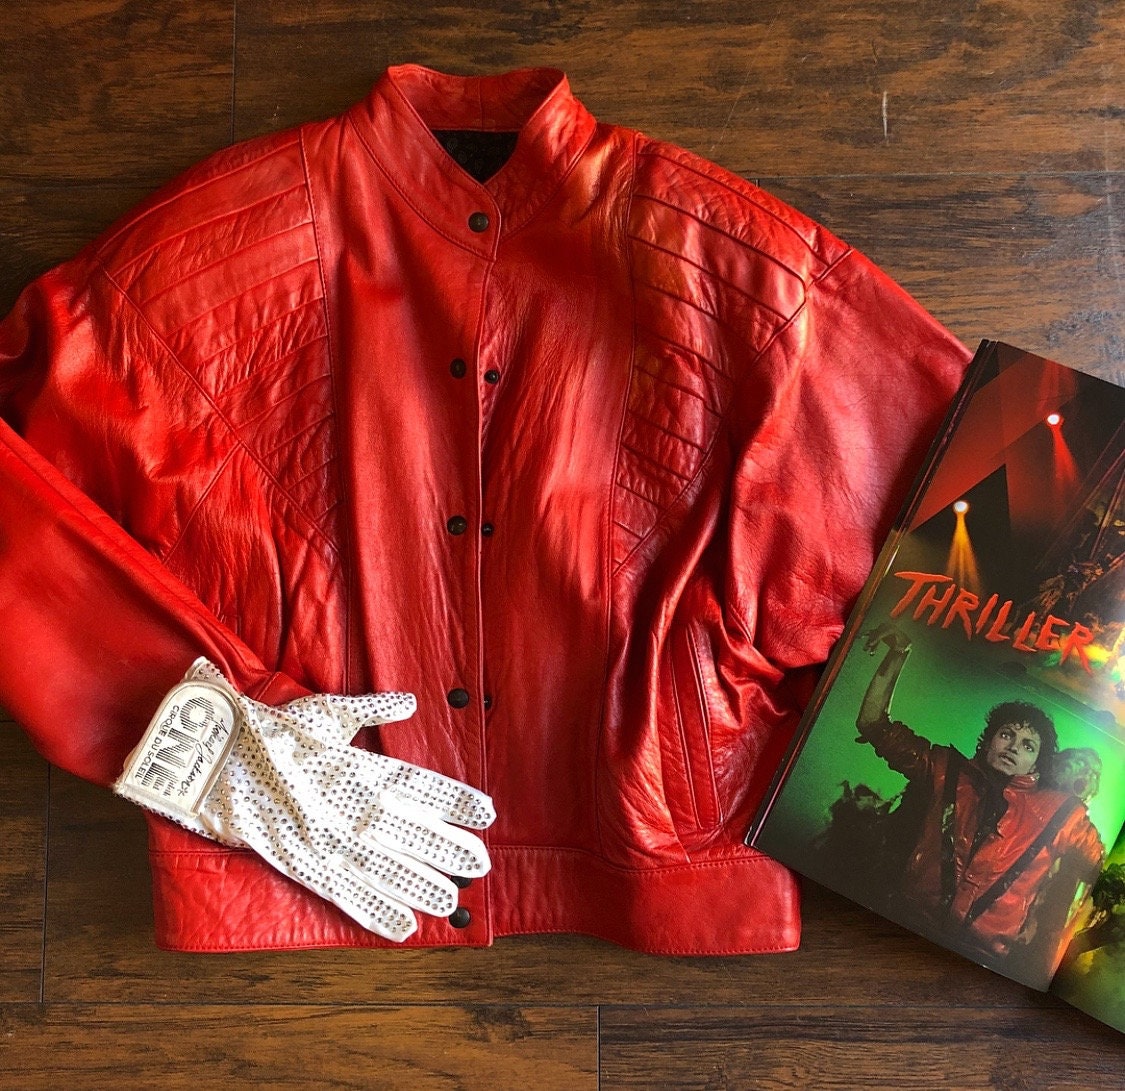 Michael Jackson Thriller For Halloween! : r/cosplay